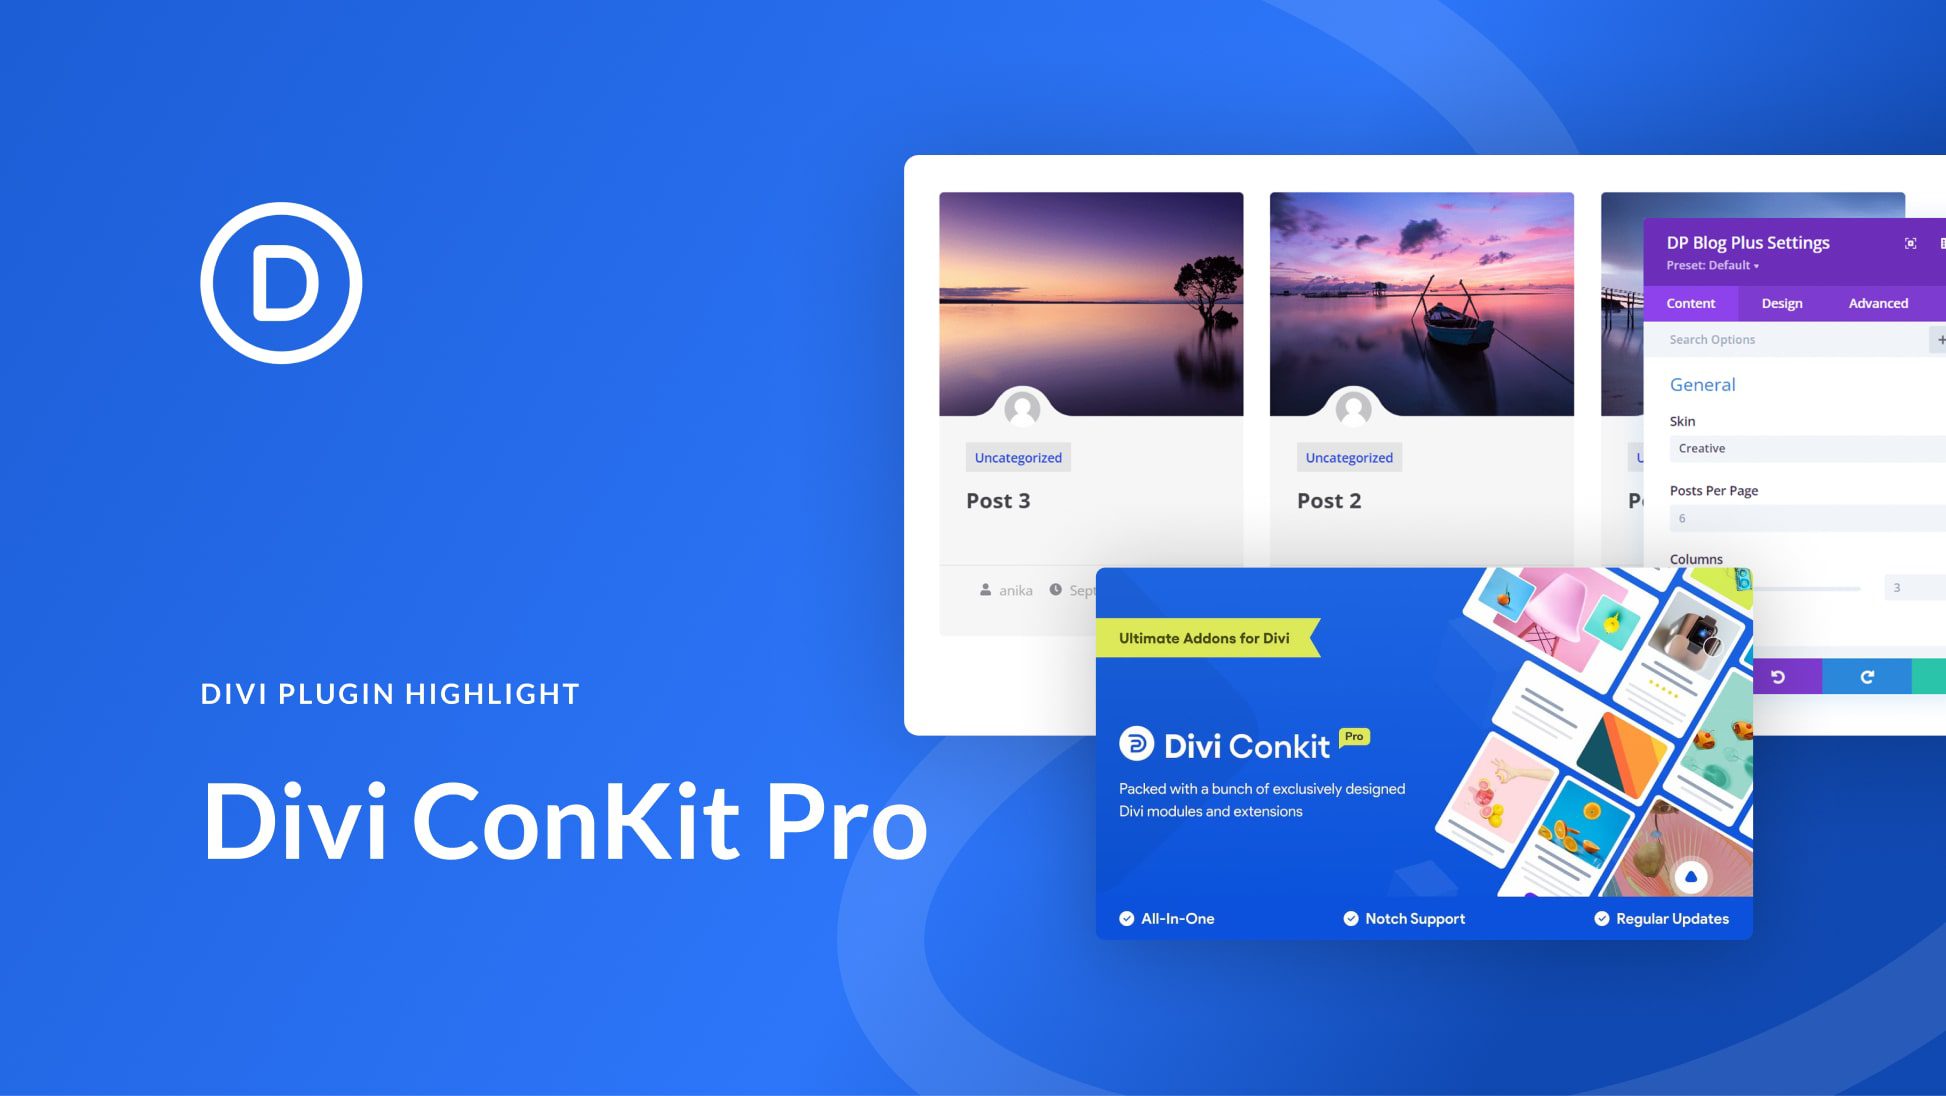 Divi Plugin Highlight: Divi ConKit Pro